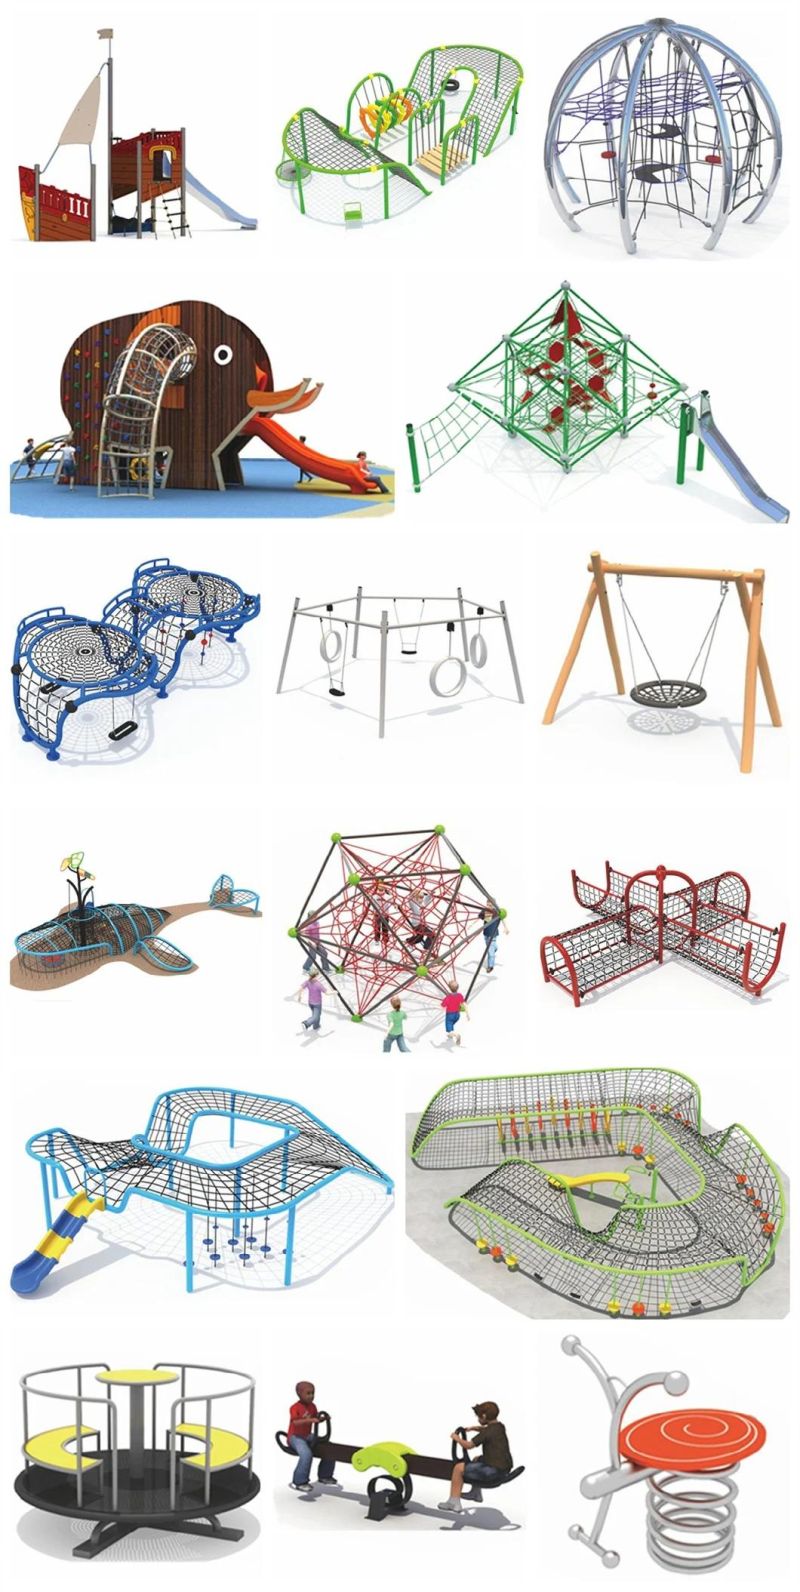 Customized Children′s Outdoor Playground Stainless Steel Slide Amusement Park Equipment